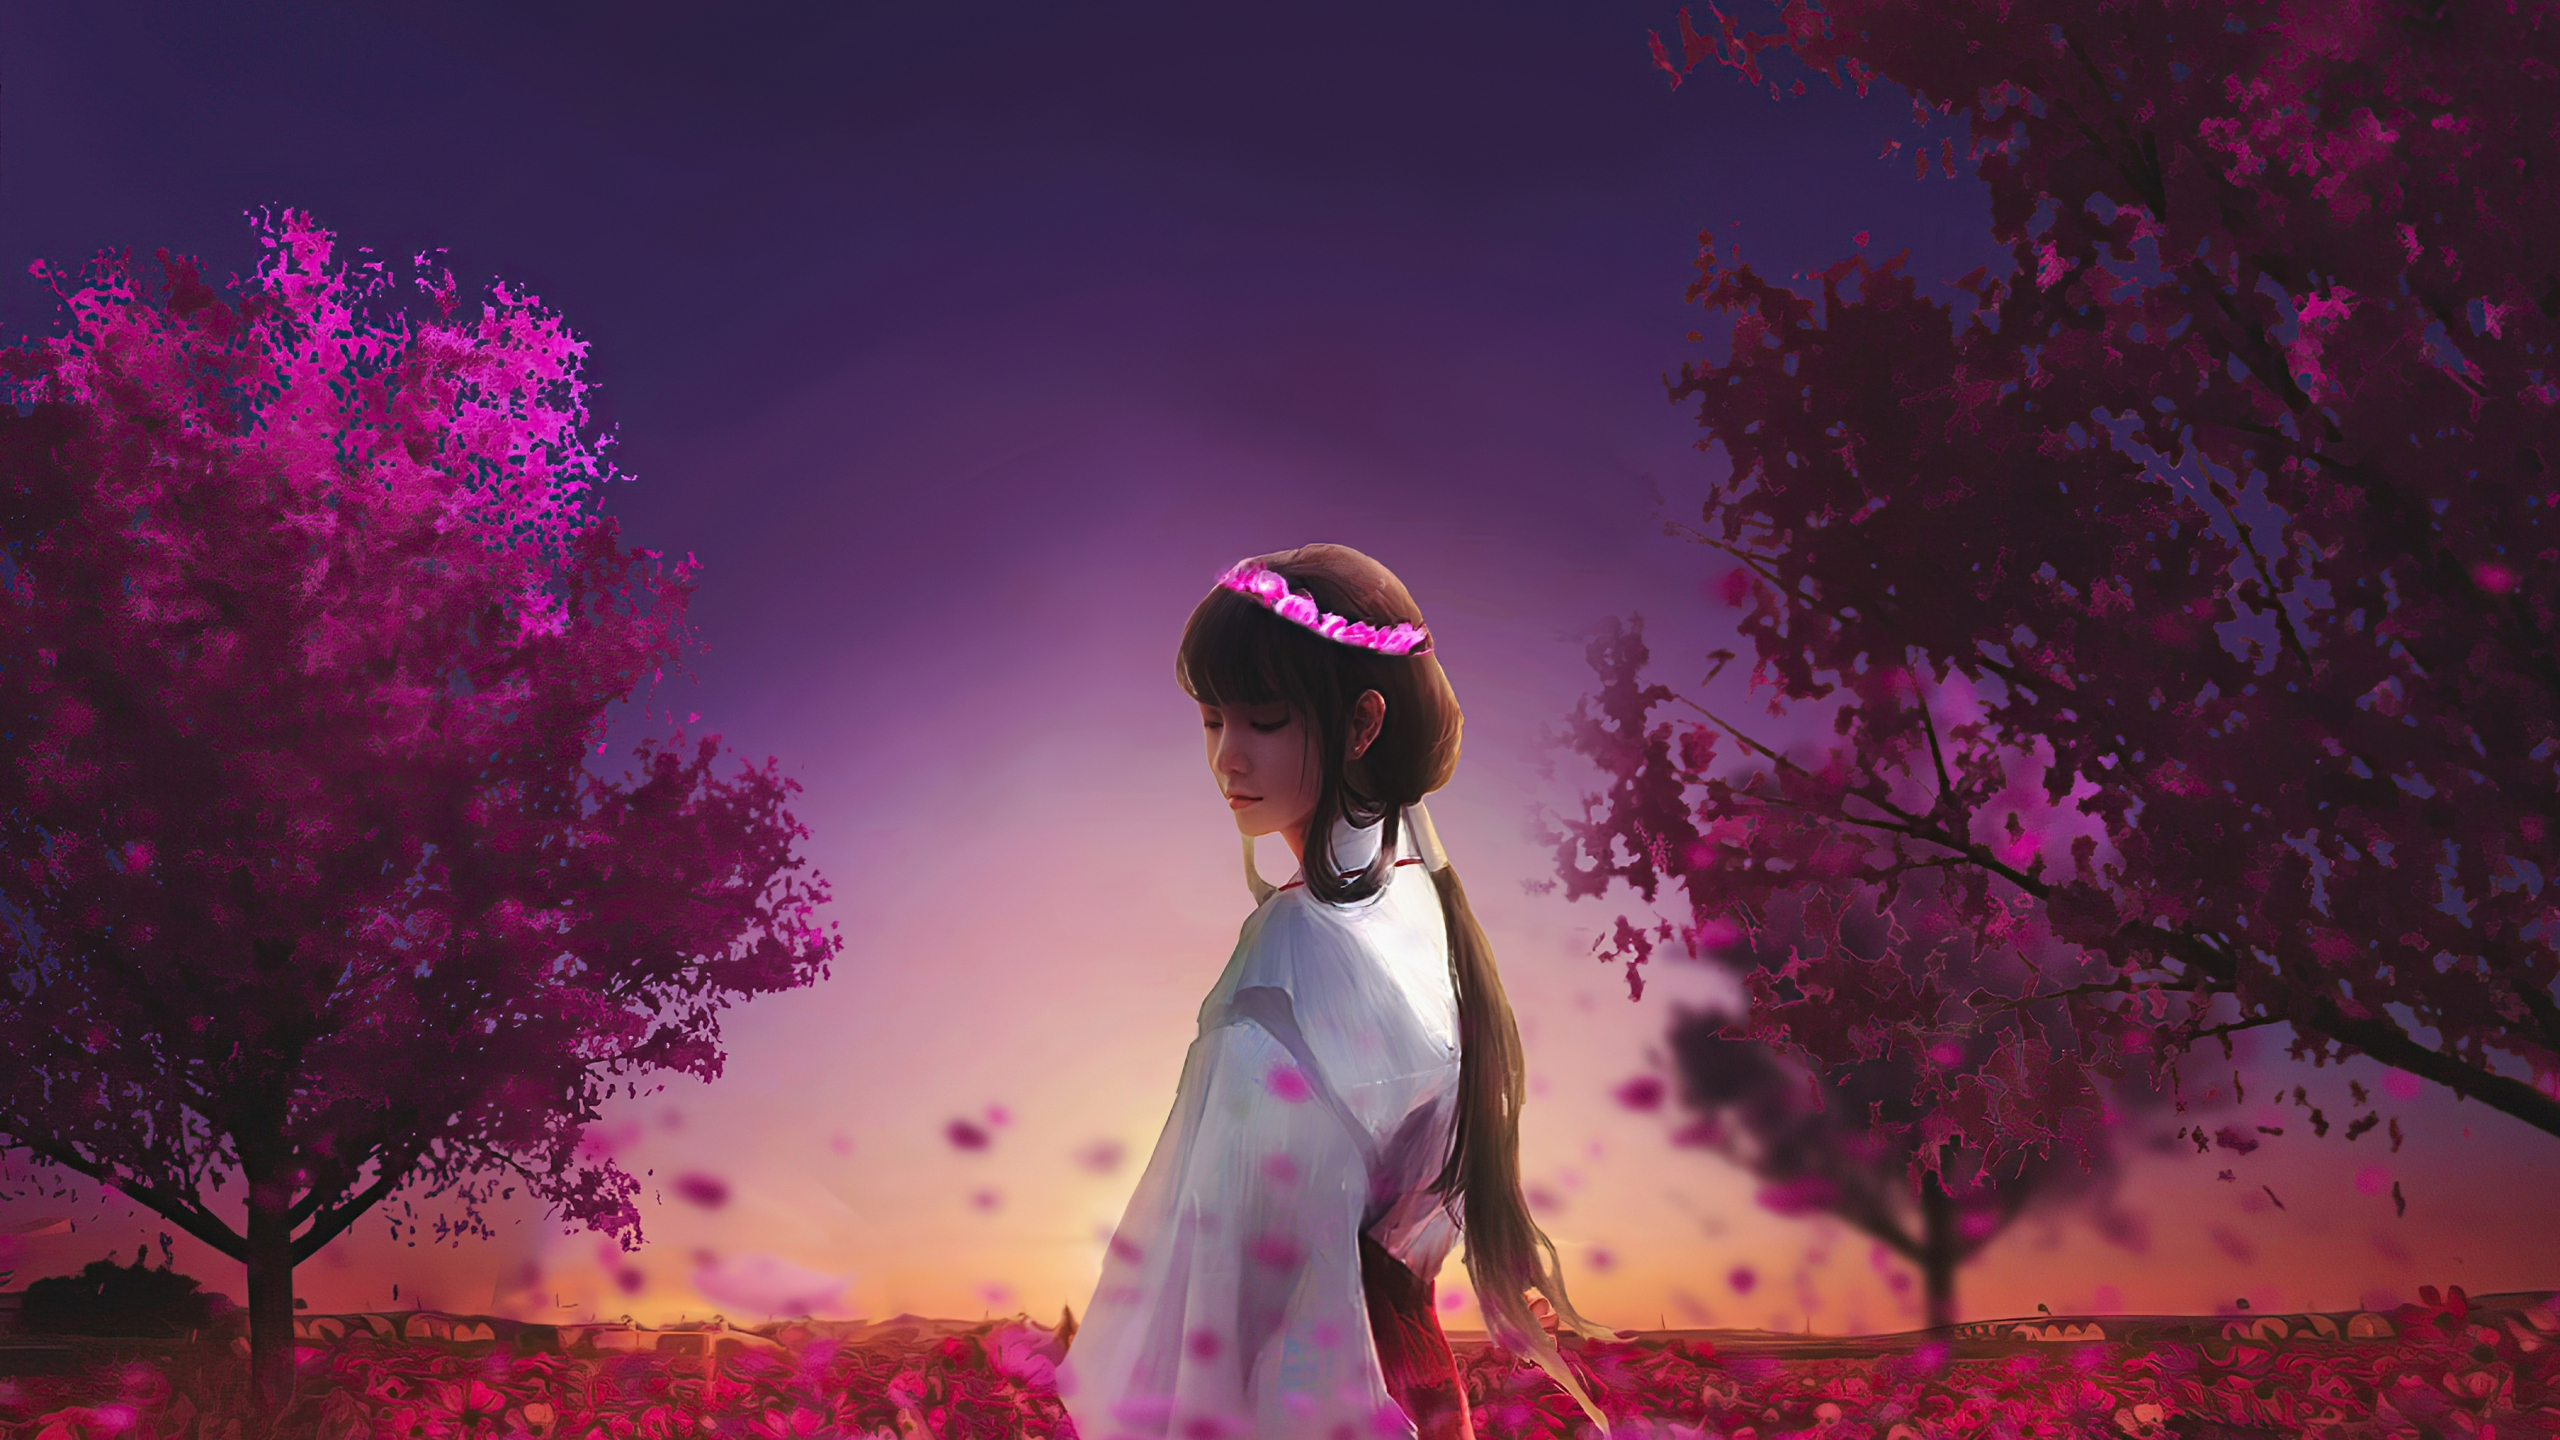 Download wallpaper 2560x1440 ancient dress, anime girl, walk, garden,  blossom, artwork, dual wide 16:9 2560x1440 hd background, 24990